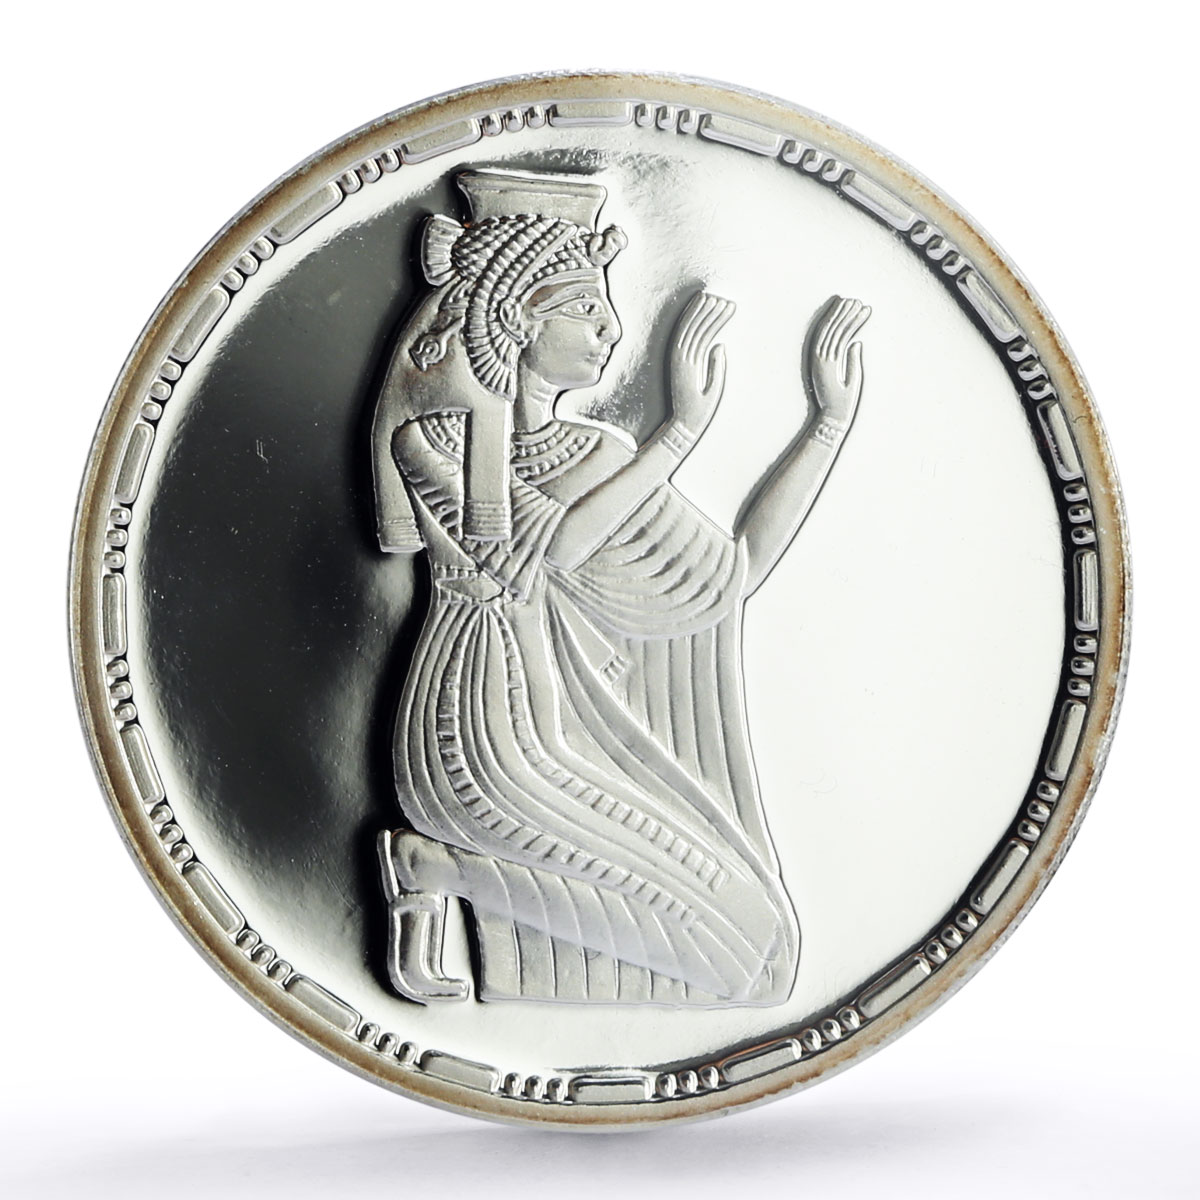 Egypt 5 pounds Treasures Queen Nefertiti Sculpture PR69 PCGS silver coin 1994